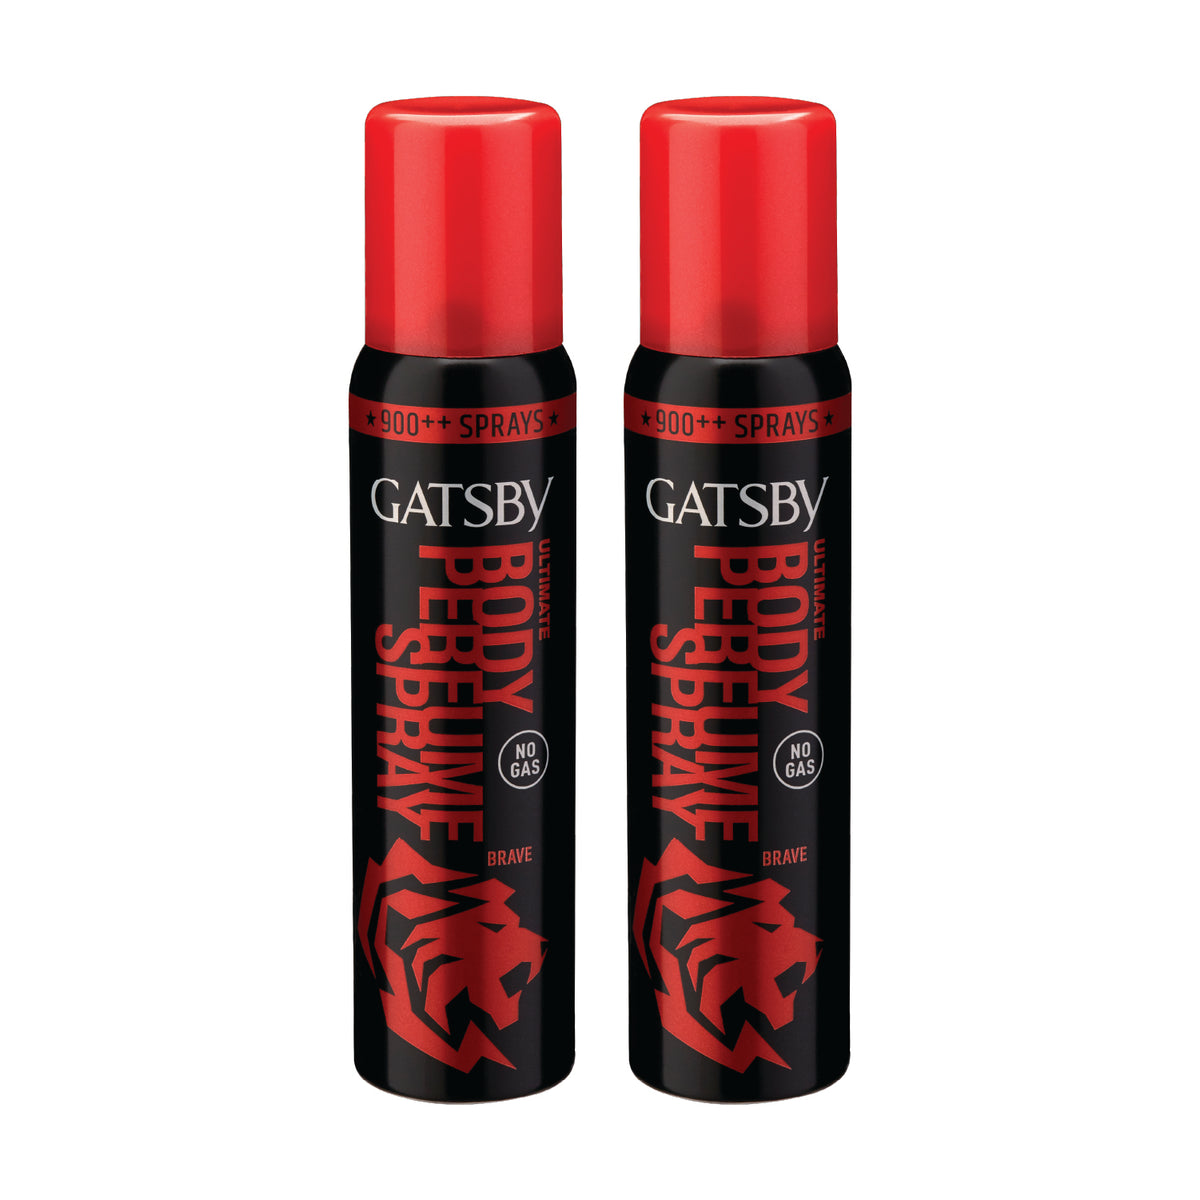 Gatsby Ultimate Body Perfume Spray - Brave, 120 ml : Buy 1 Get 1 Free! Gardenia Cosmotrade LLP